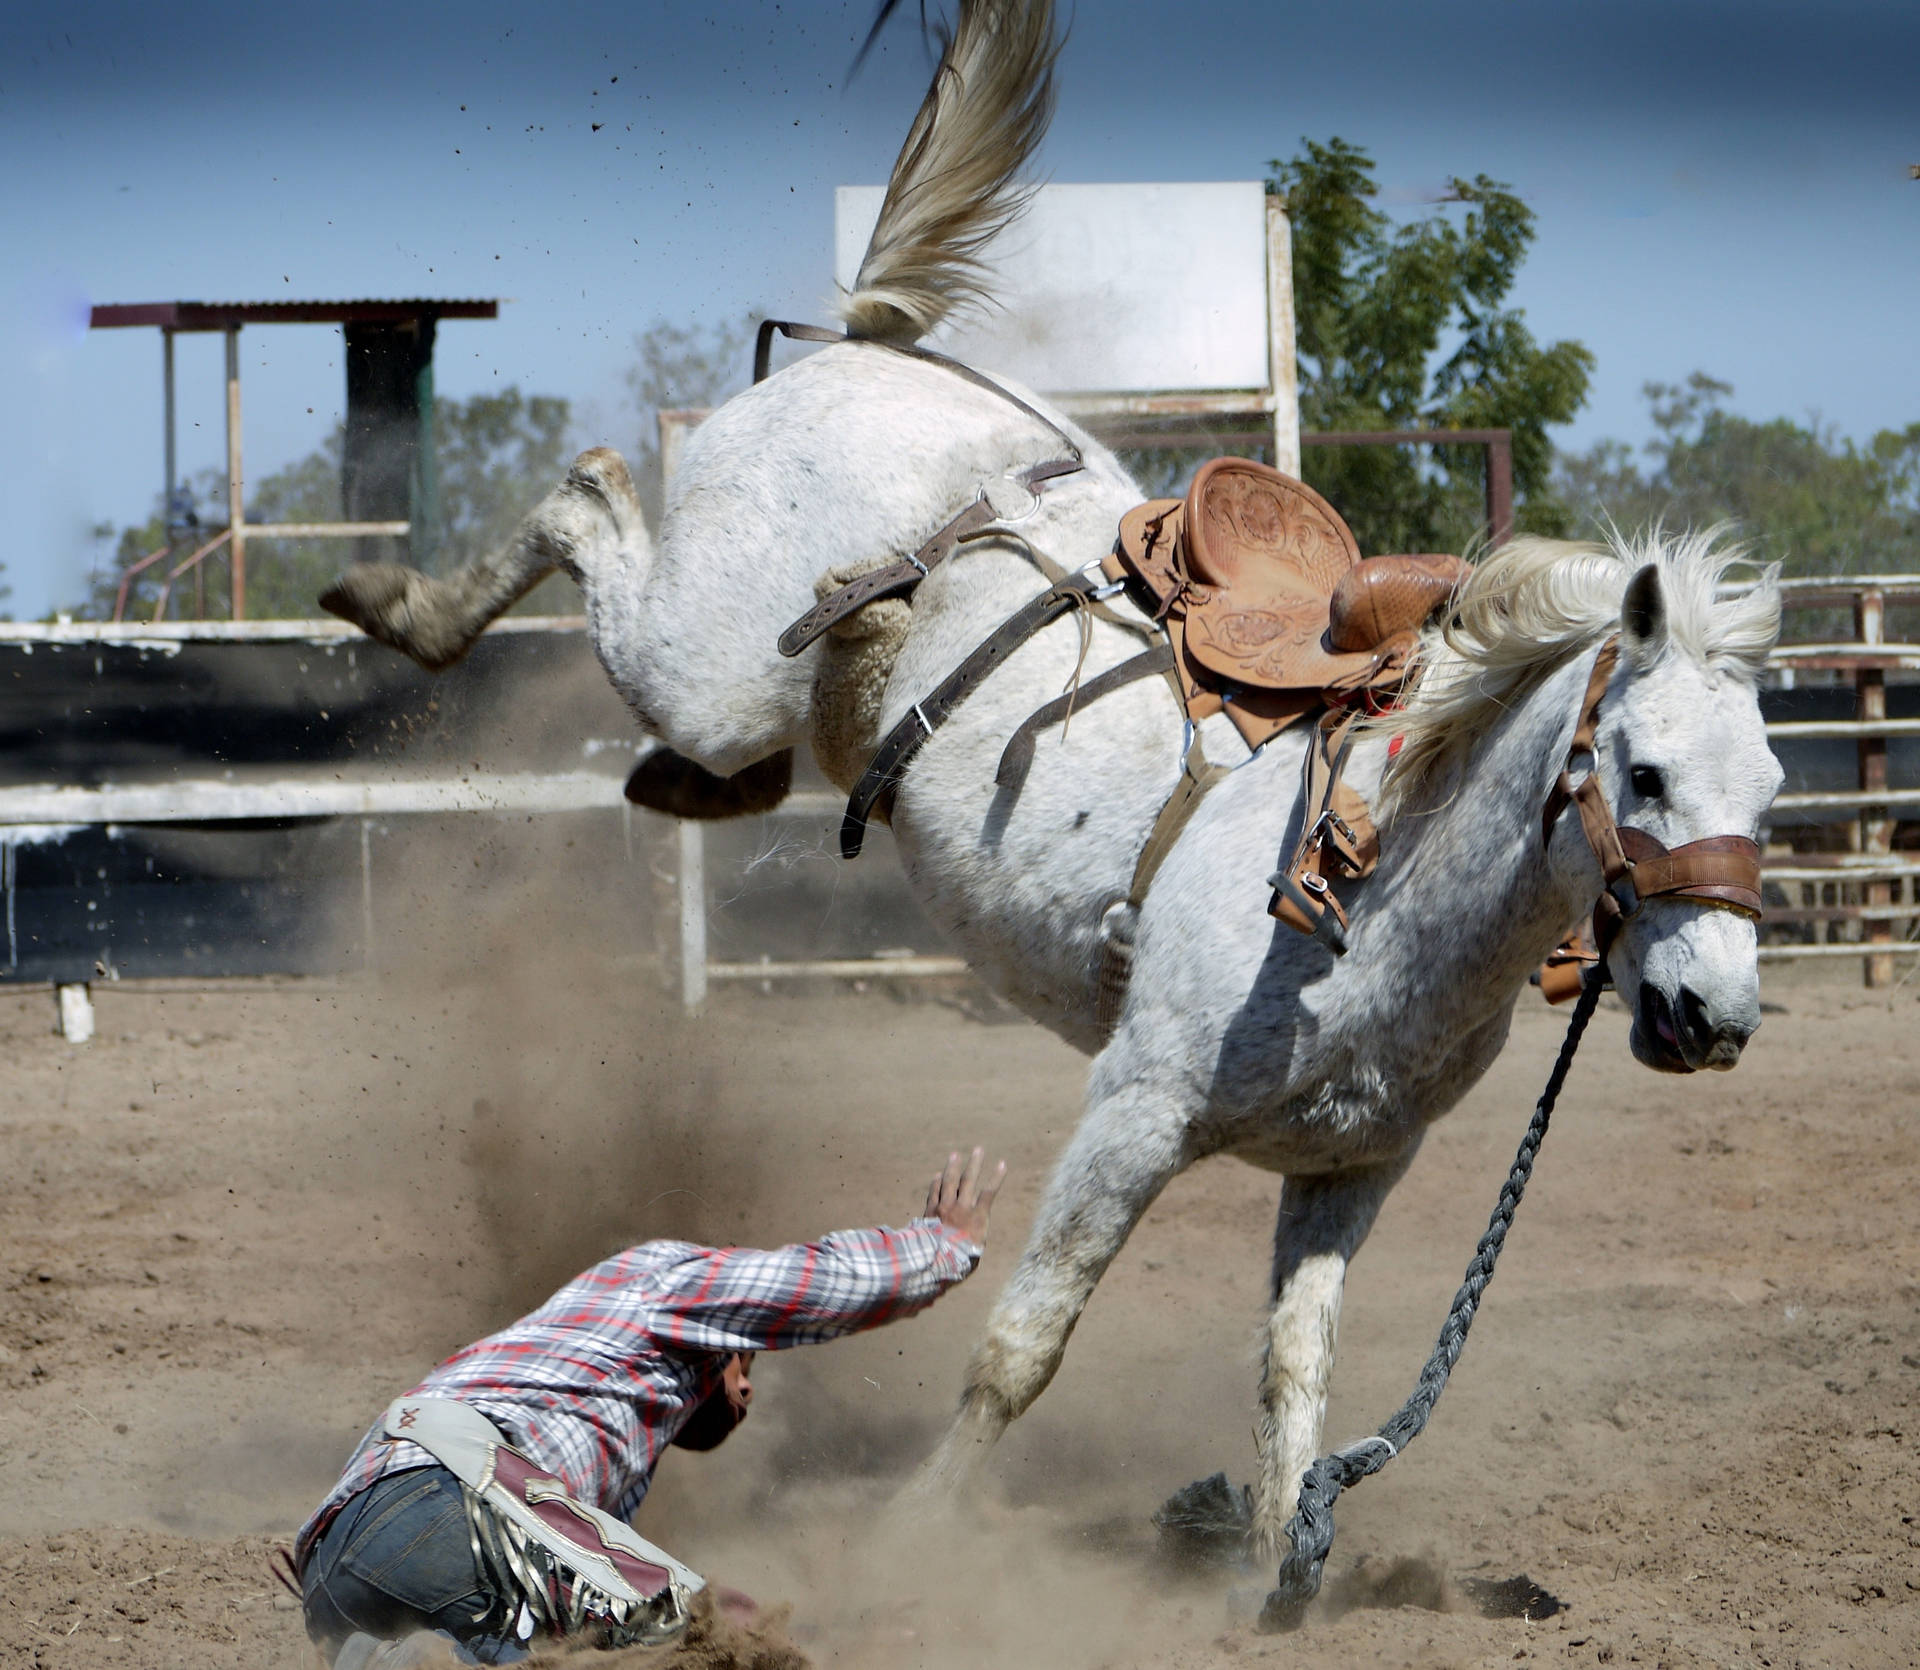 Cowboy Fallen From White Horse Wallpaper